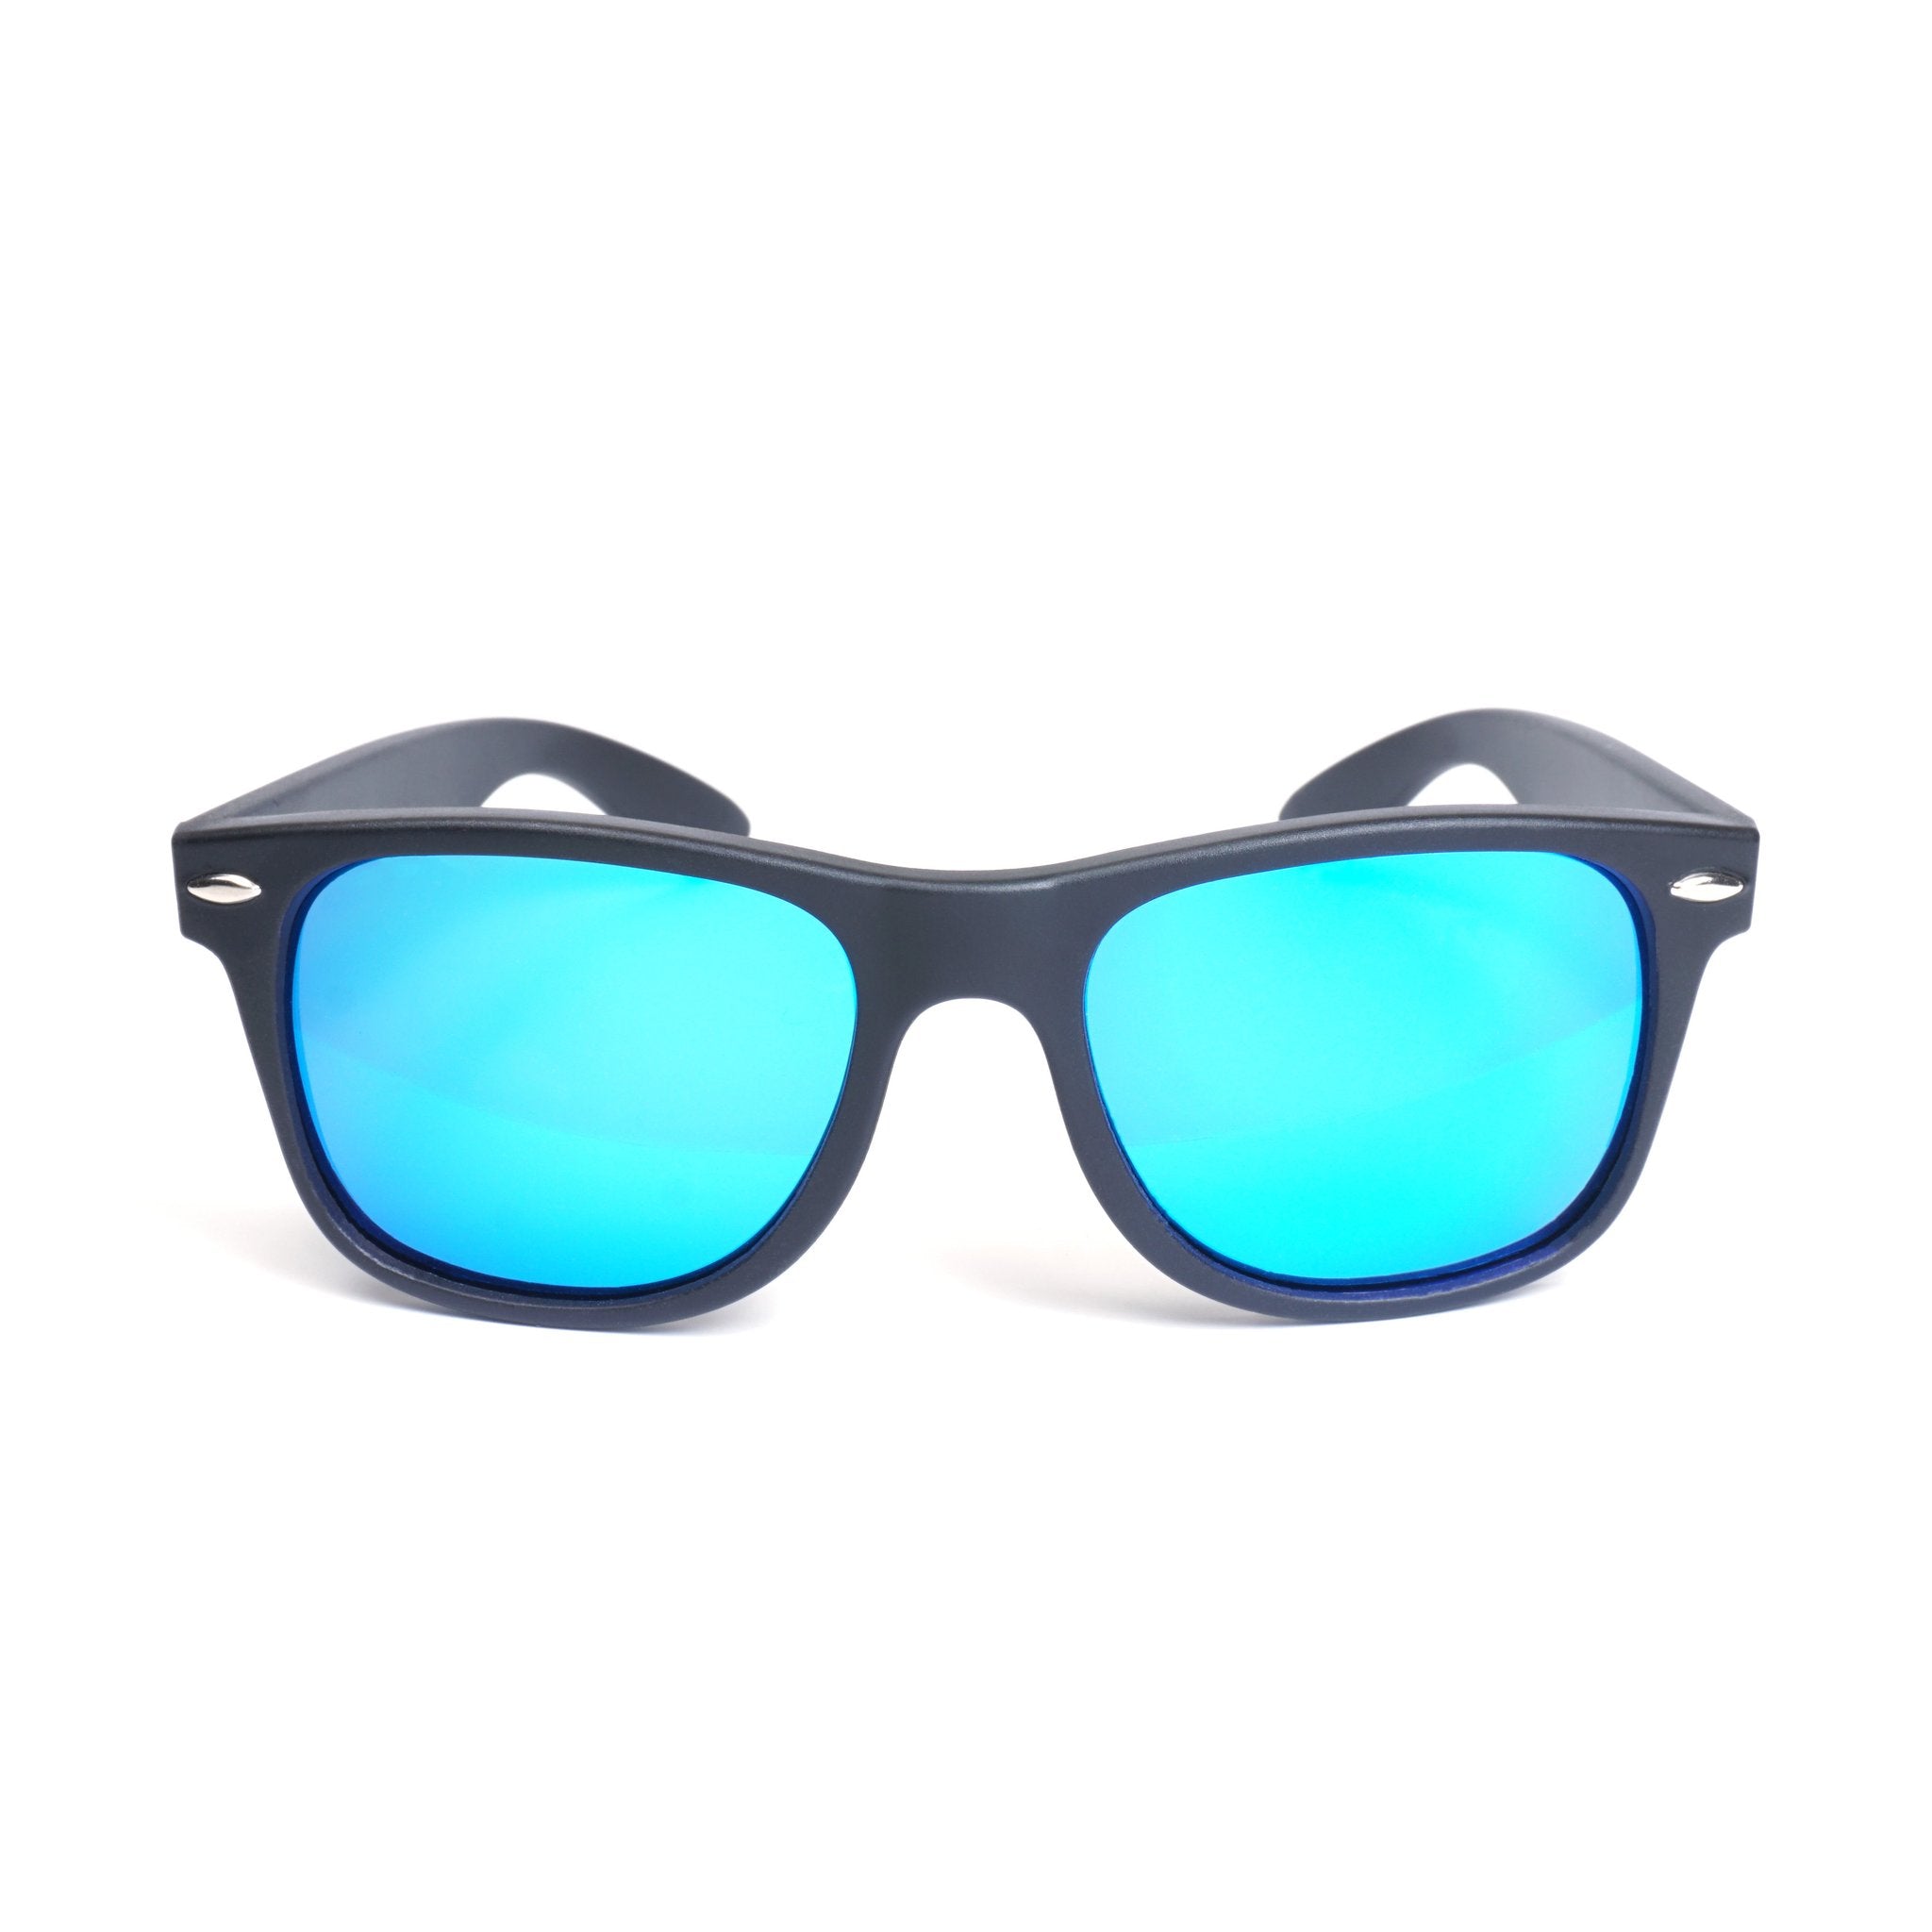 Stage Rebel Floating Sunglasses - Blue Revo Lens